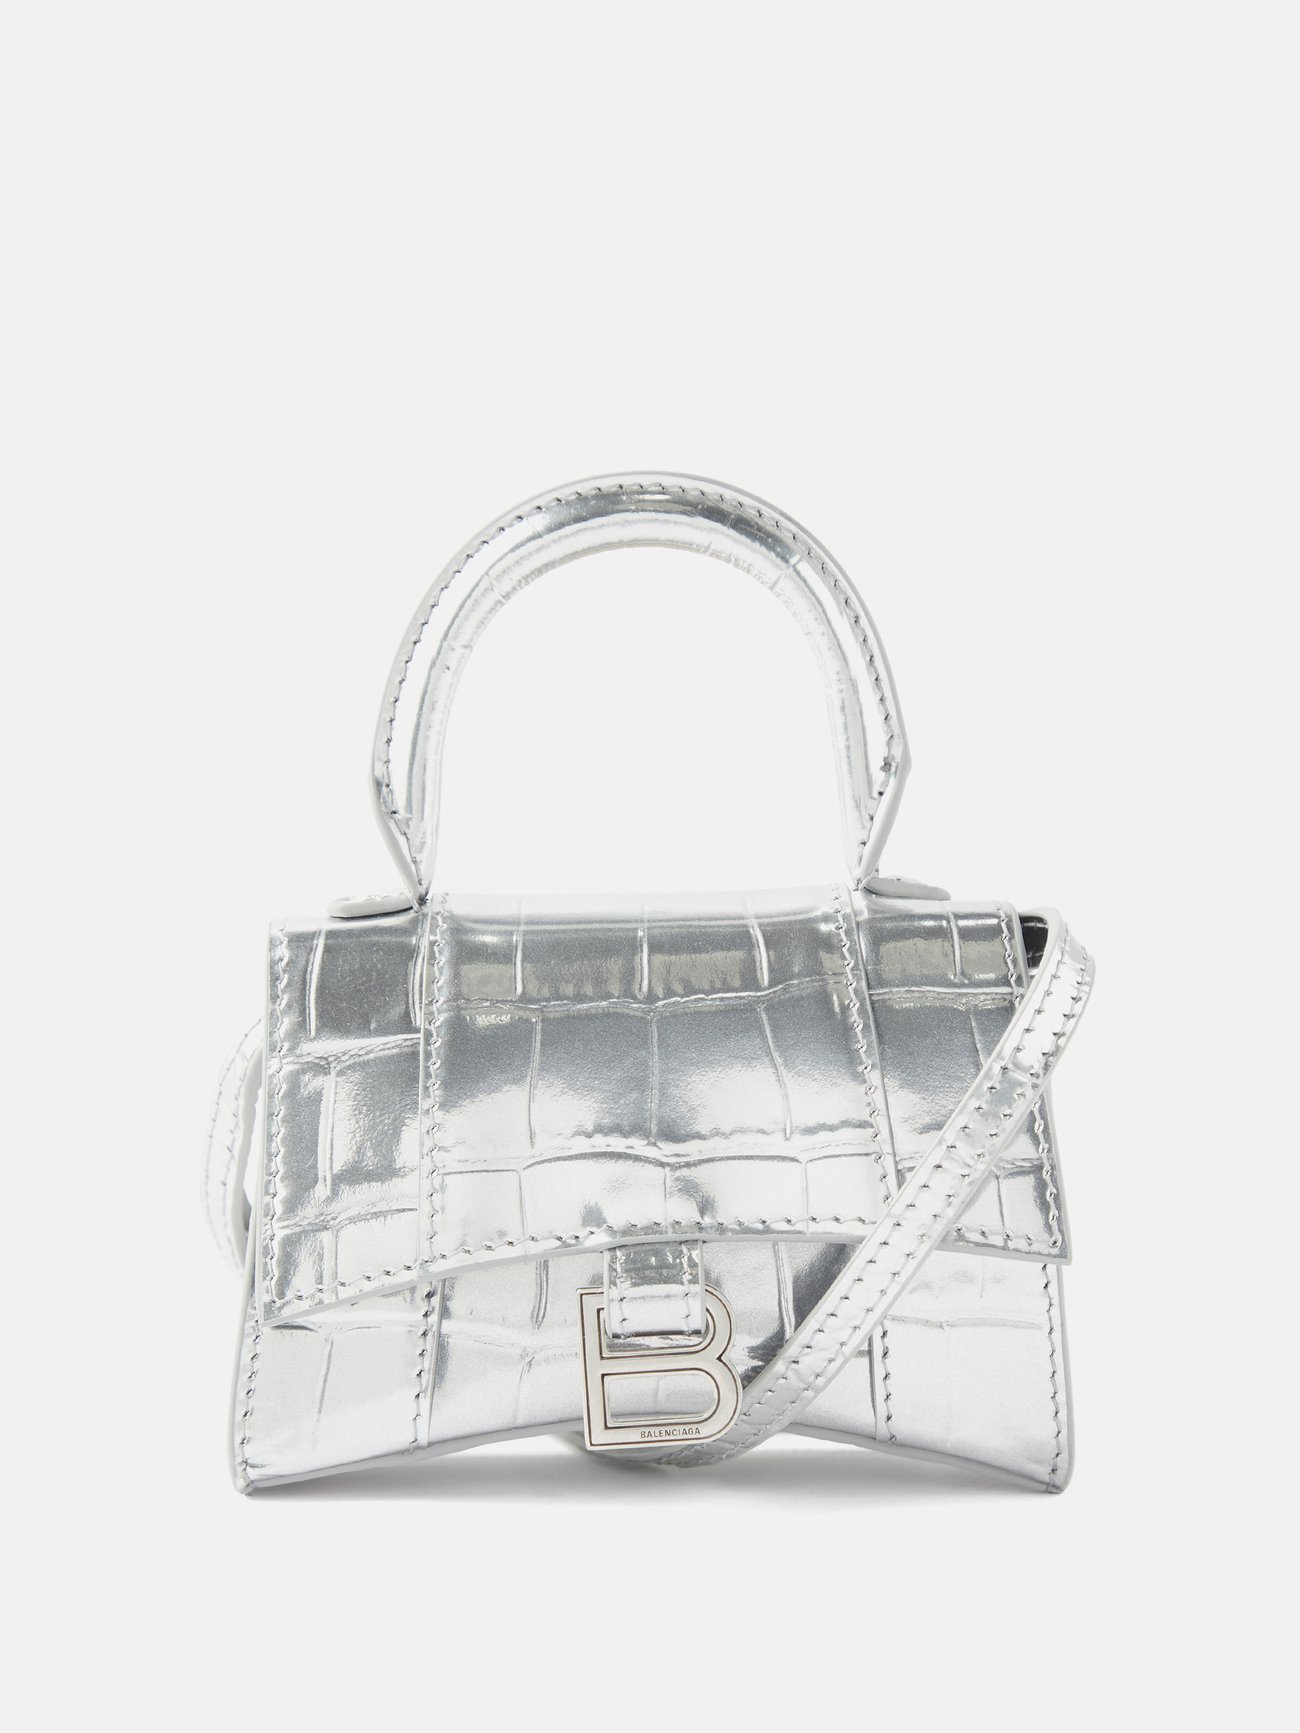 Hourglass leather mini bag Balenciaga Silver in Leather - 36515529